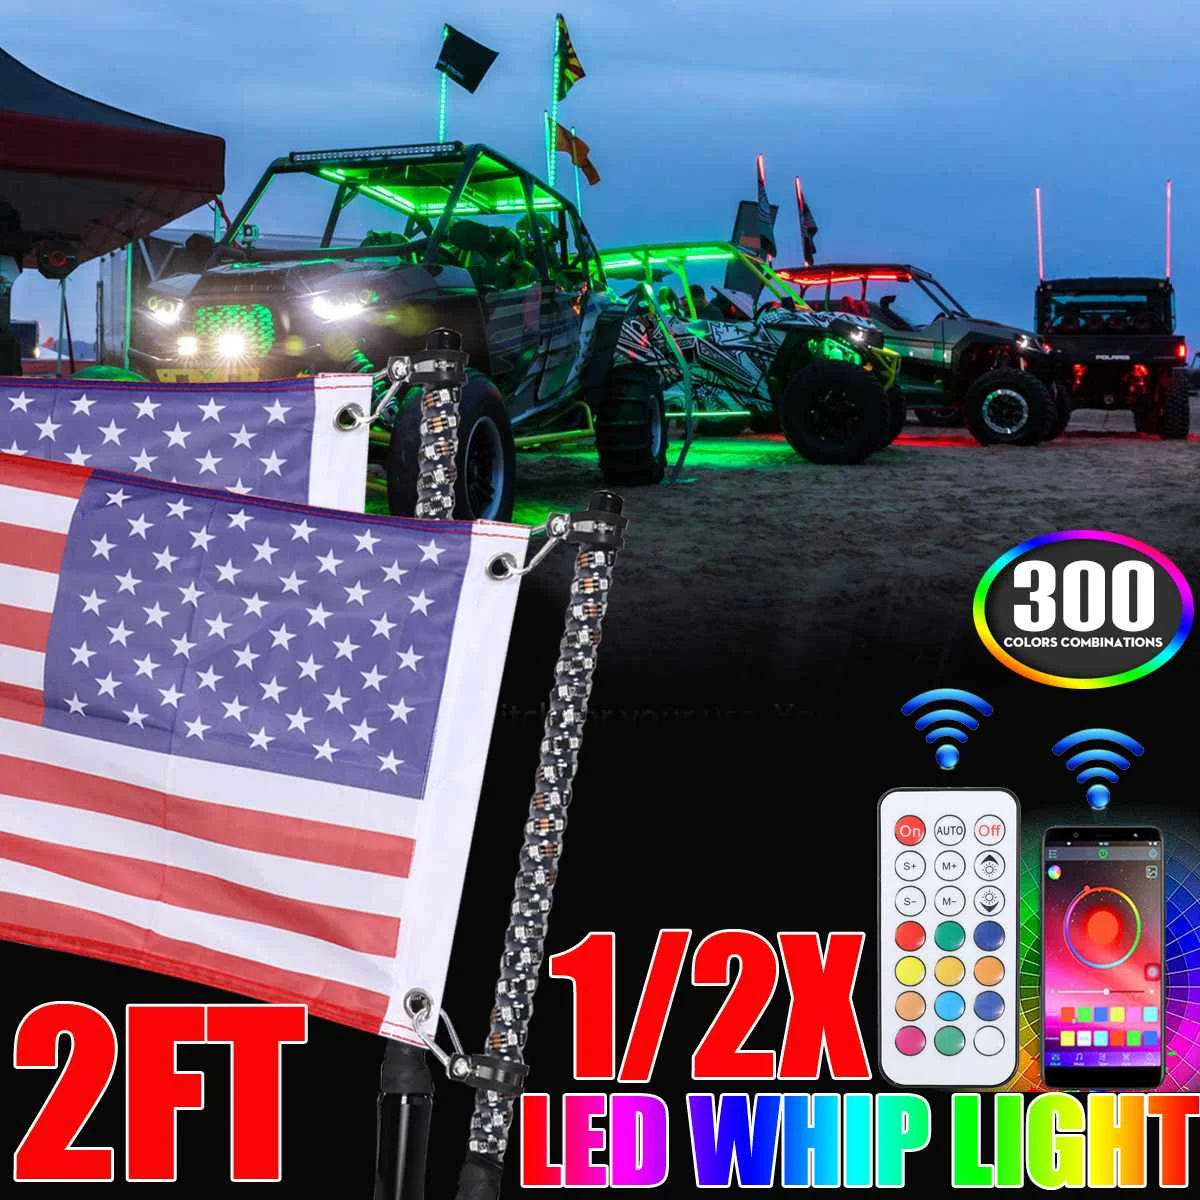 

2FT RGB Waterproof Bendable Remote Control Multi-color LED Flagpole Lamp Light Super Bright Whip Light for SUV ATV UTV, RZR